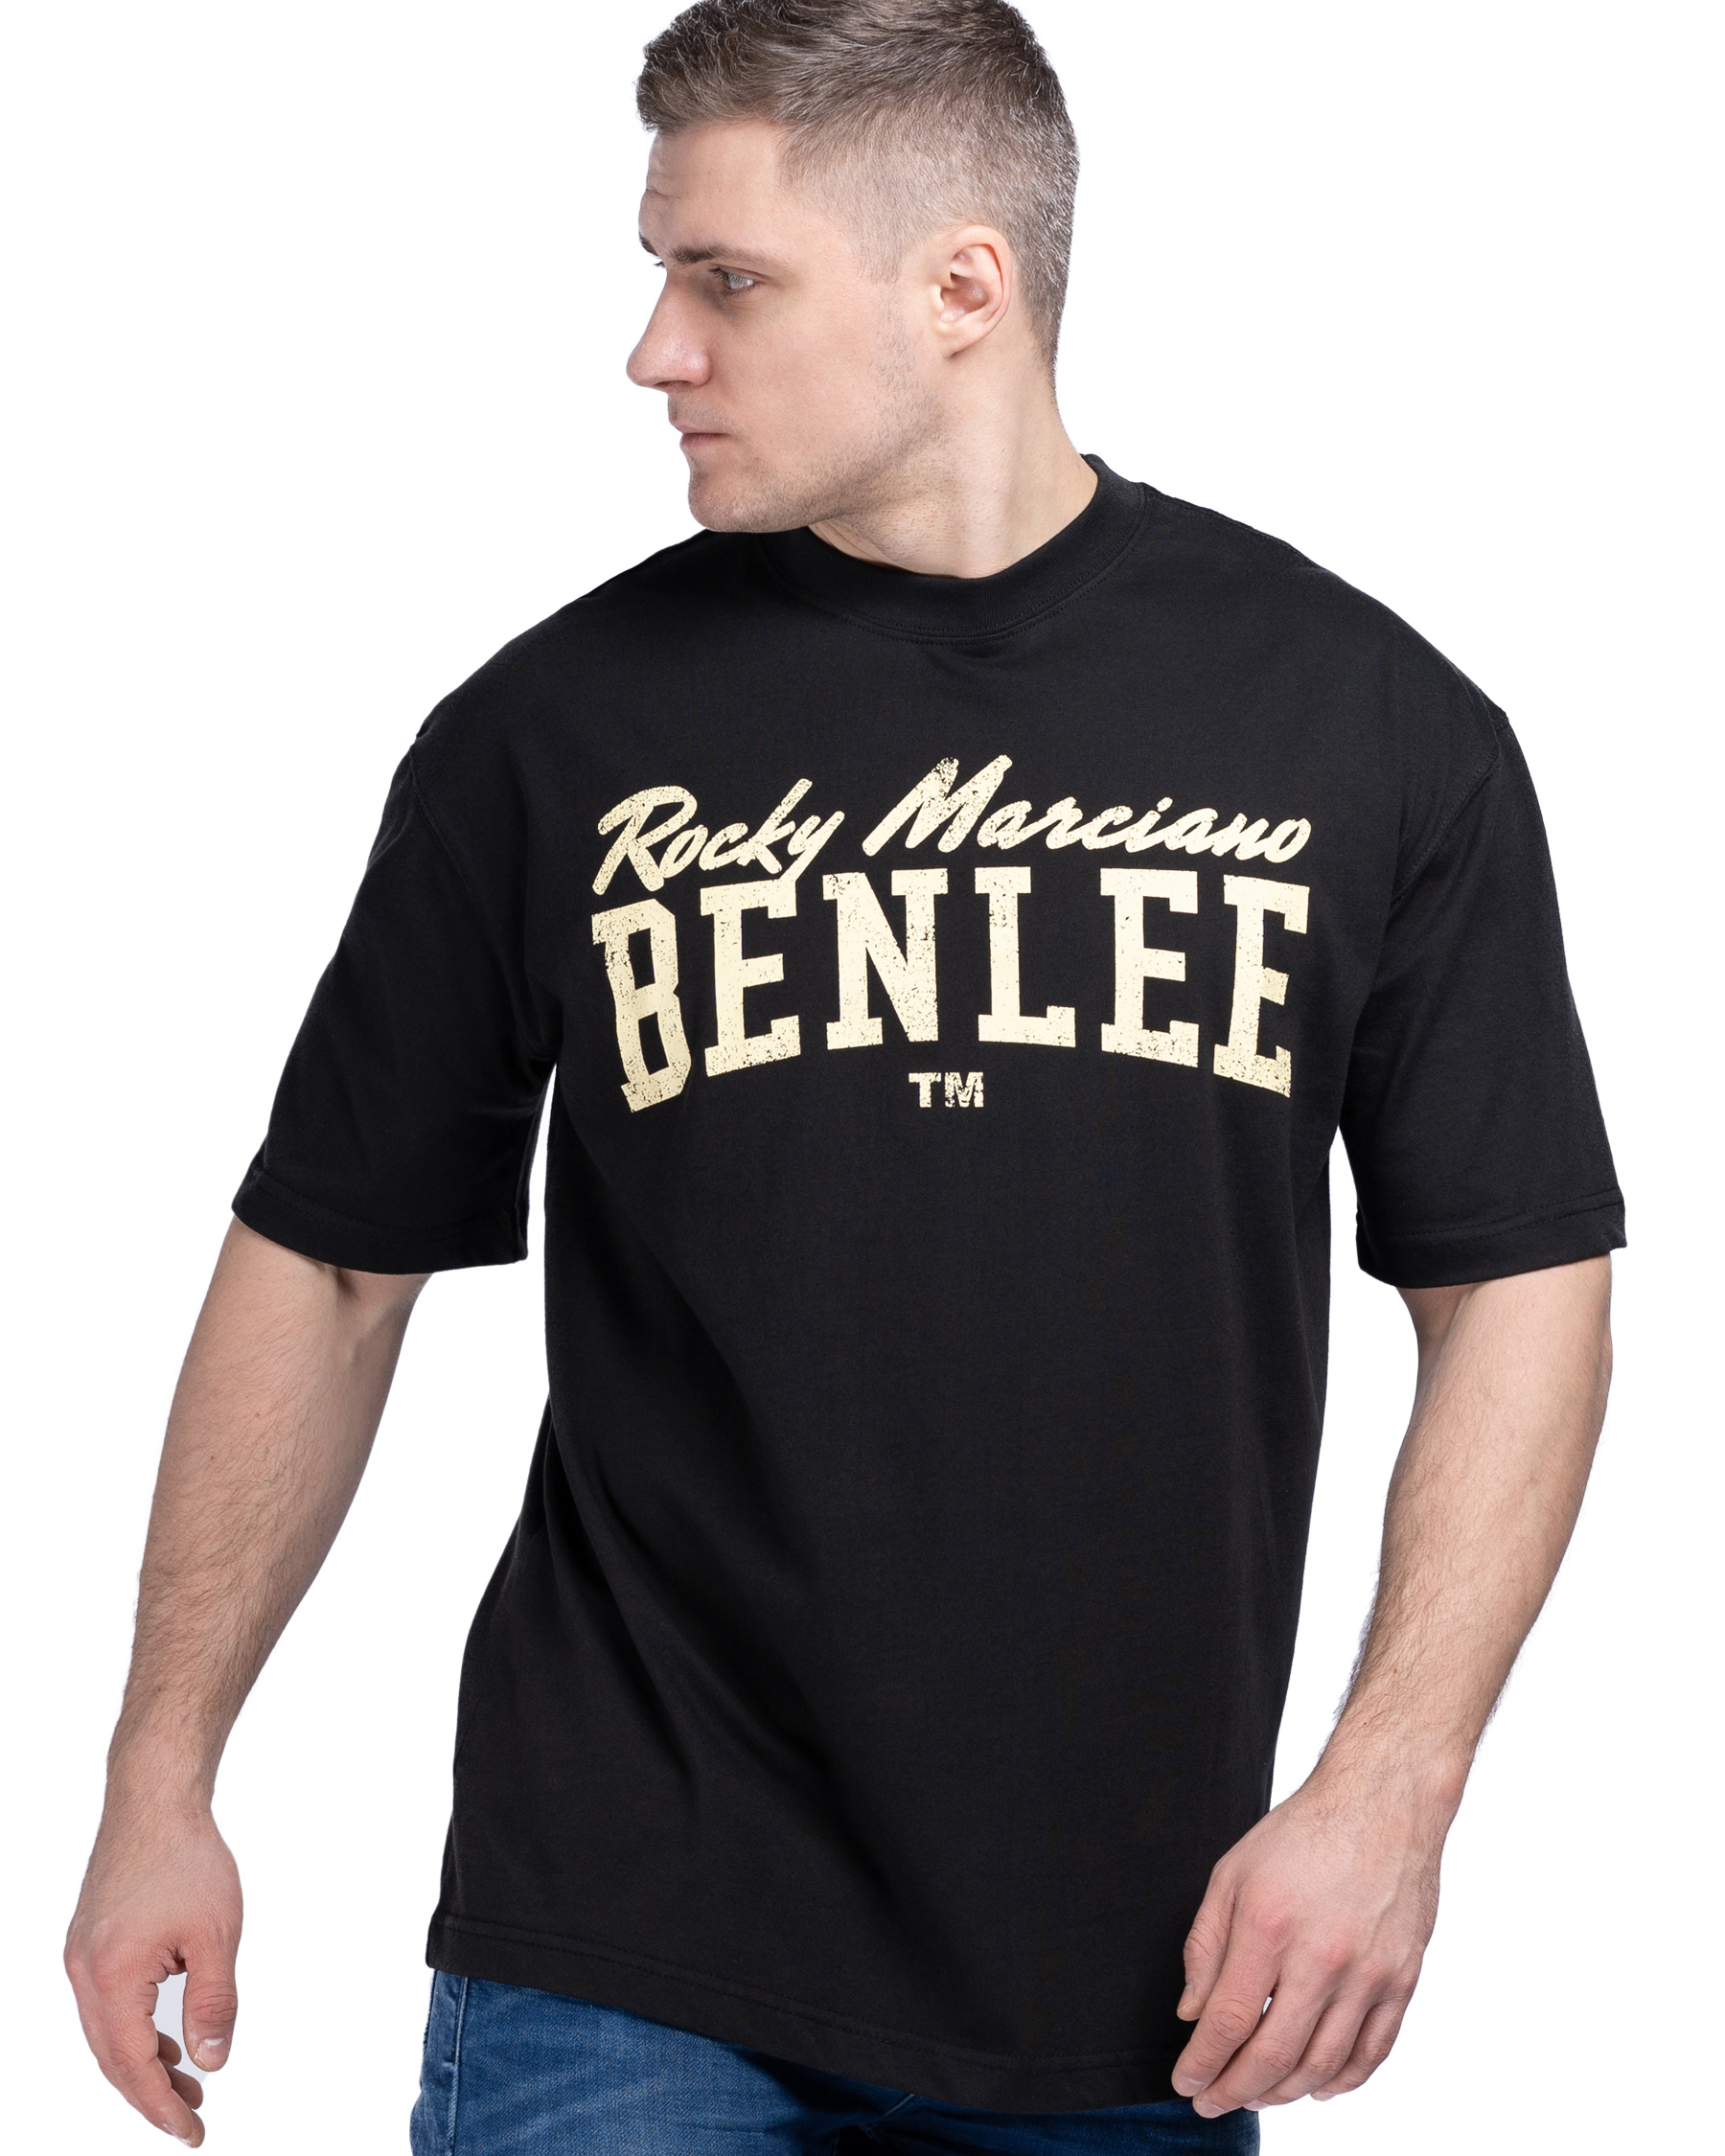 BenLee Oversize T-Shirt Lonny